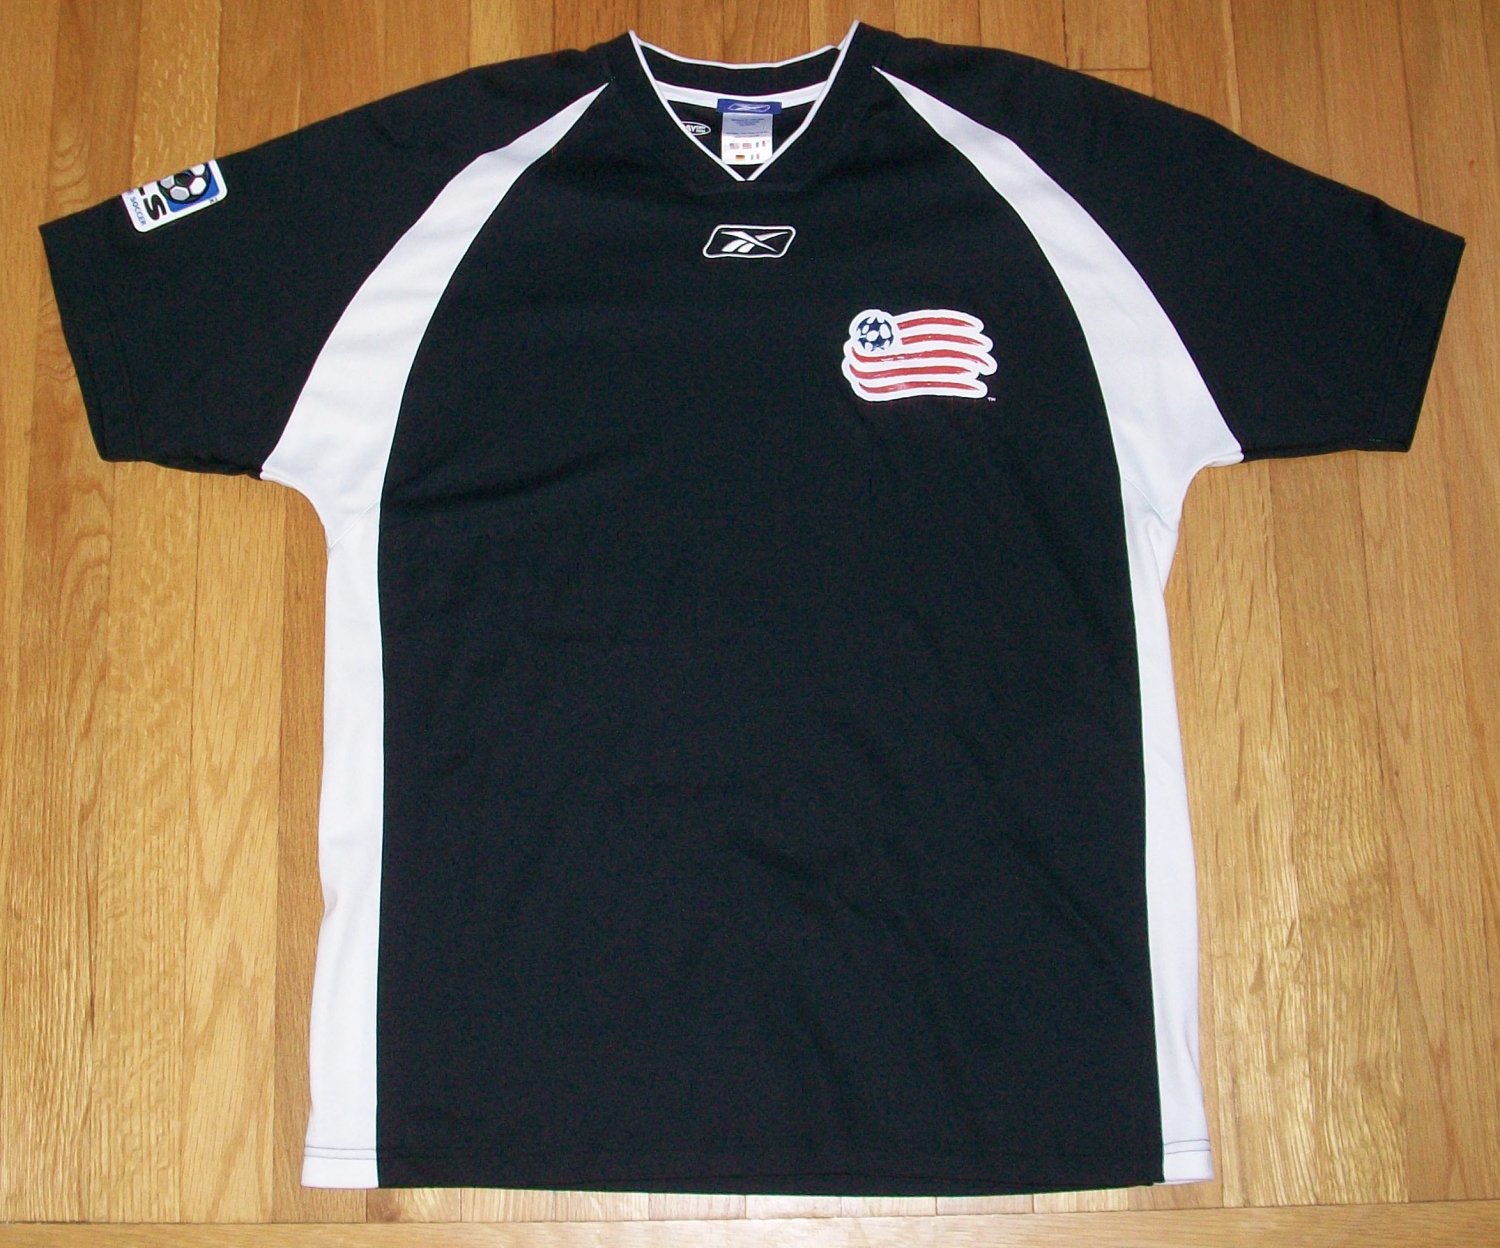 New England Revolution Training/Leisure football shirt 2004.